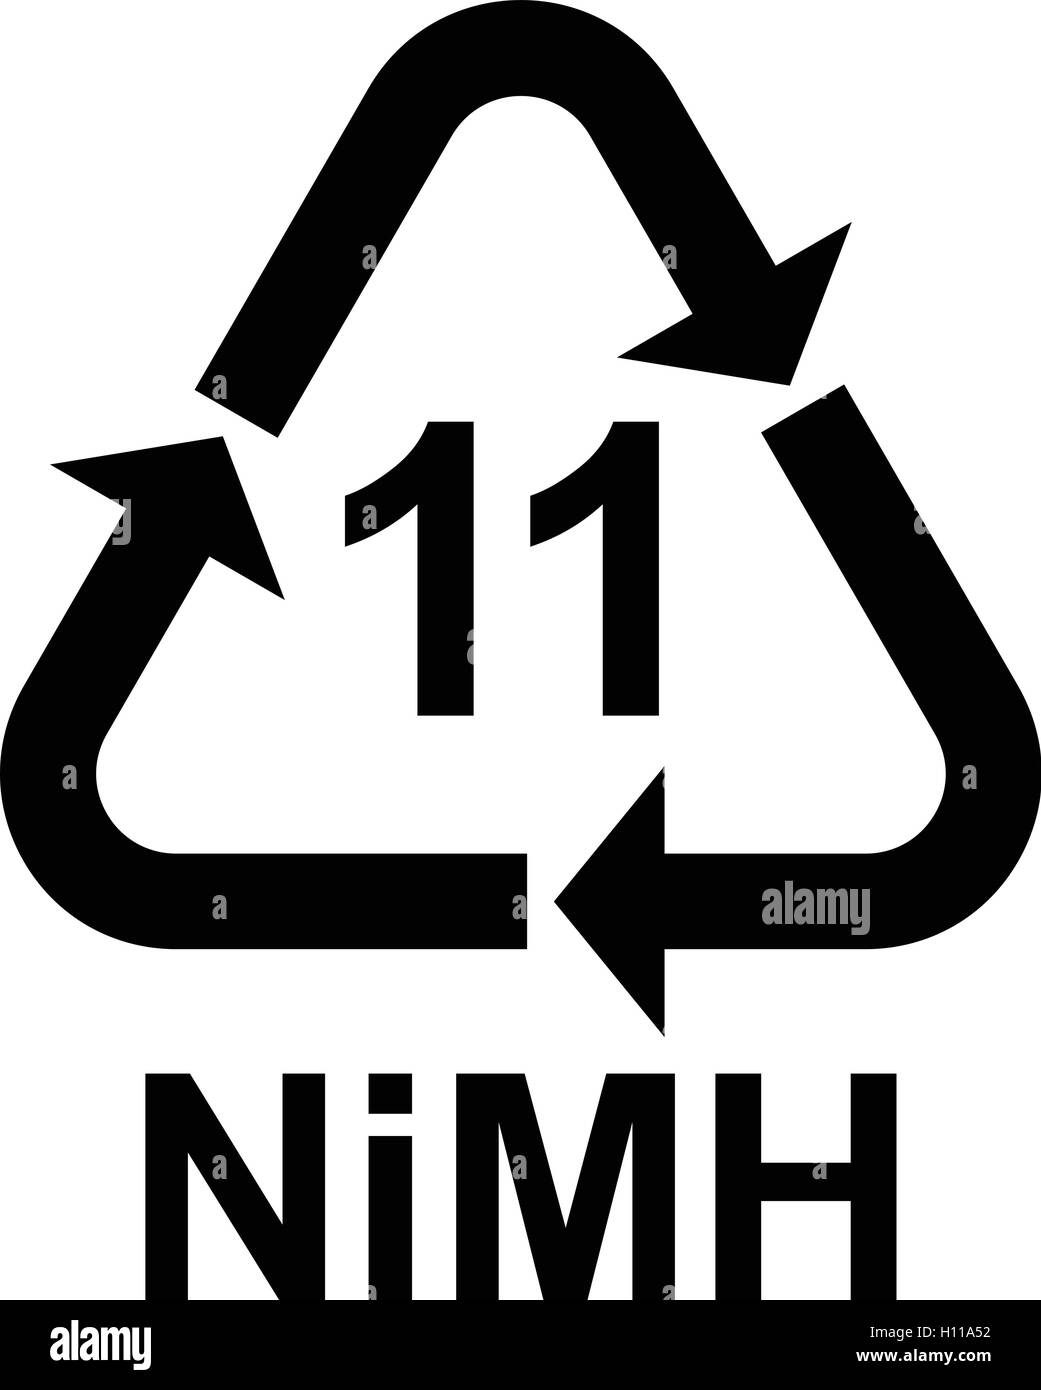 Symbole de recyclage des piles nimh, 11 code de recyclage de batteries nimh  11, vector illustration Image Vectorielle Stock - Alamy